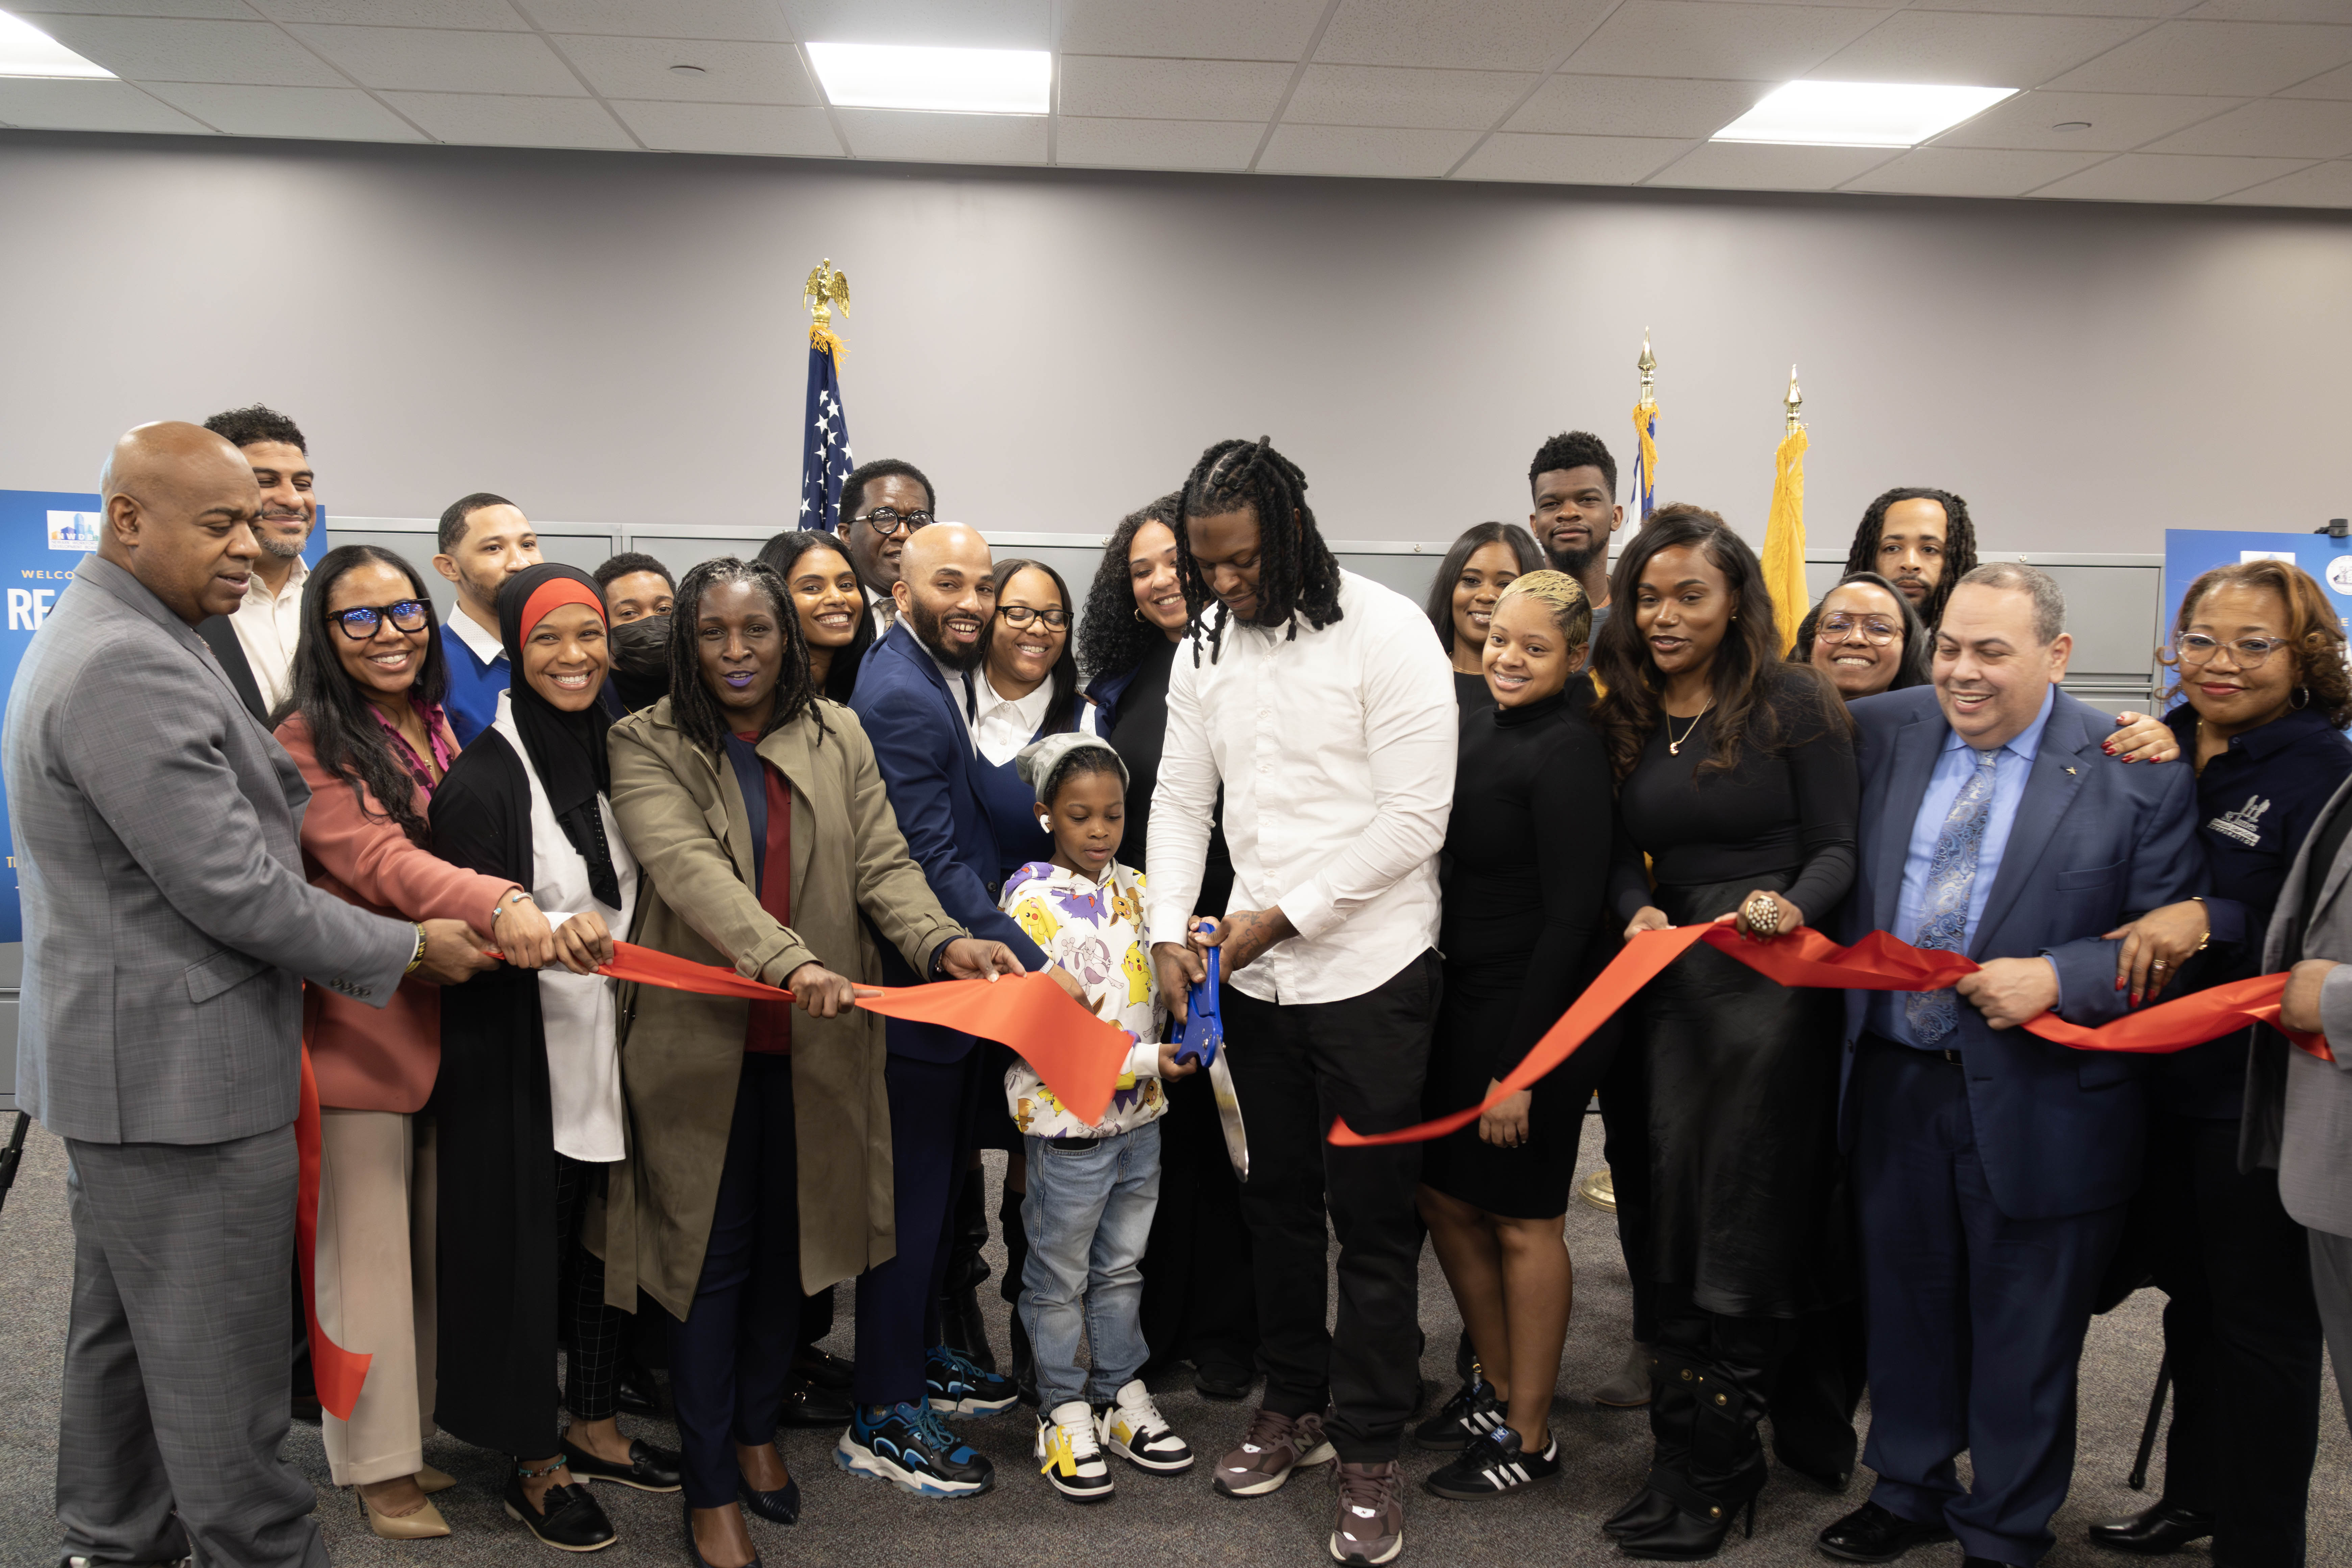 Newark Mayor Baraka Officially Opens Re-engagement Center